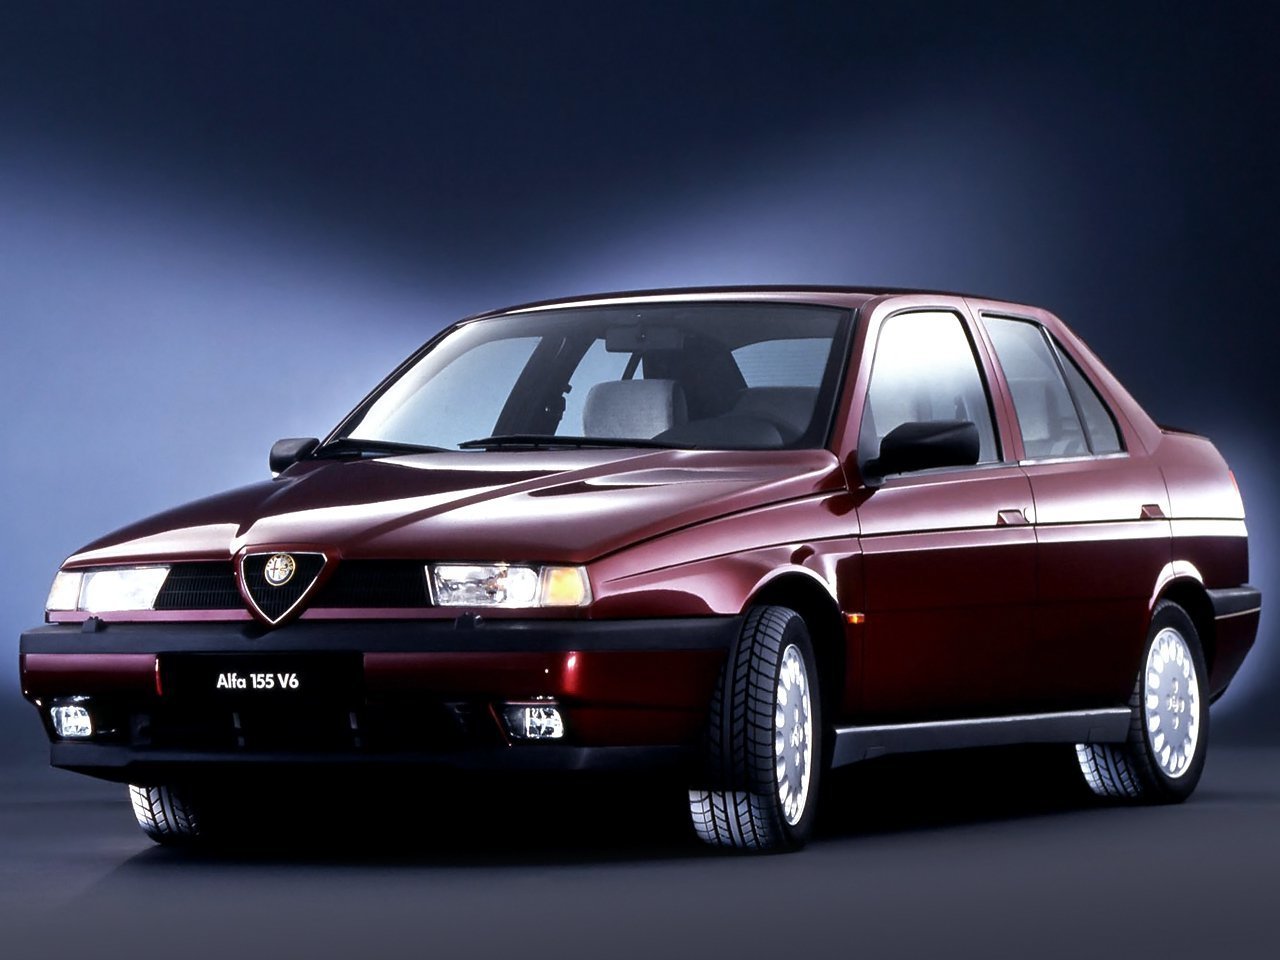 Расход газа шести комплектаций седана Alfa Romeo 155. Разница стоимости заправки газом и бензином. Автономный пробег до и после установки ГБО.